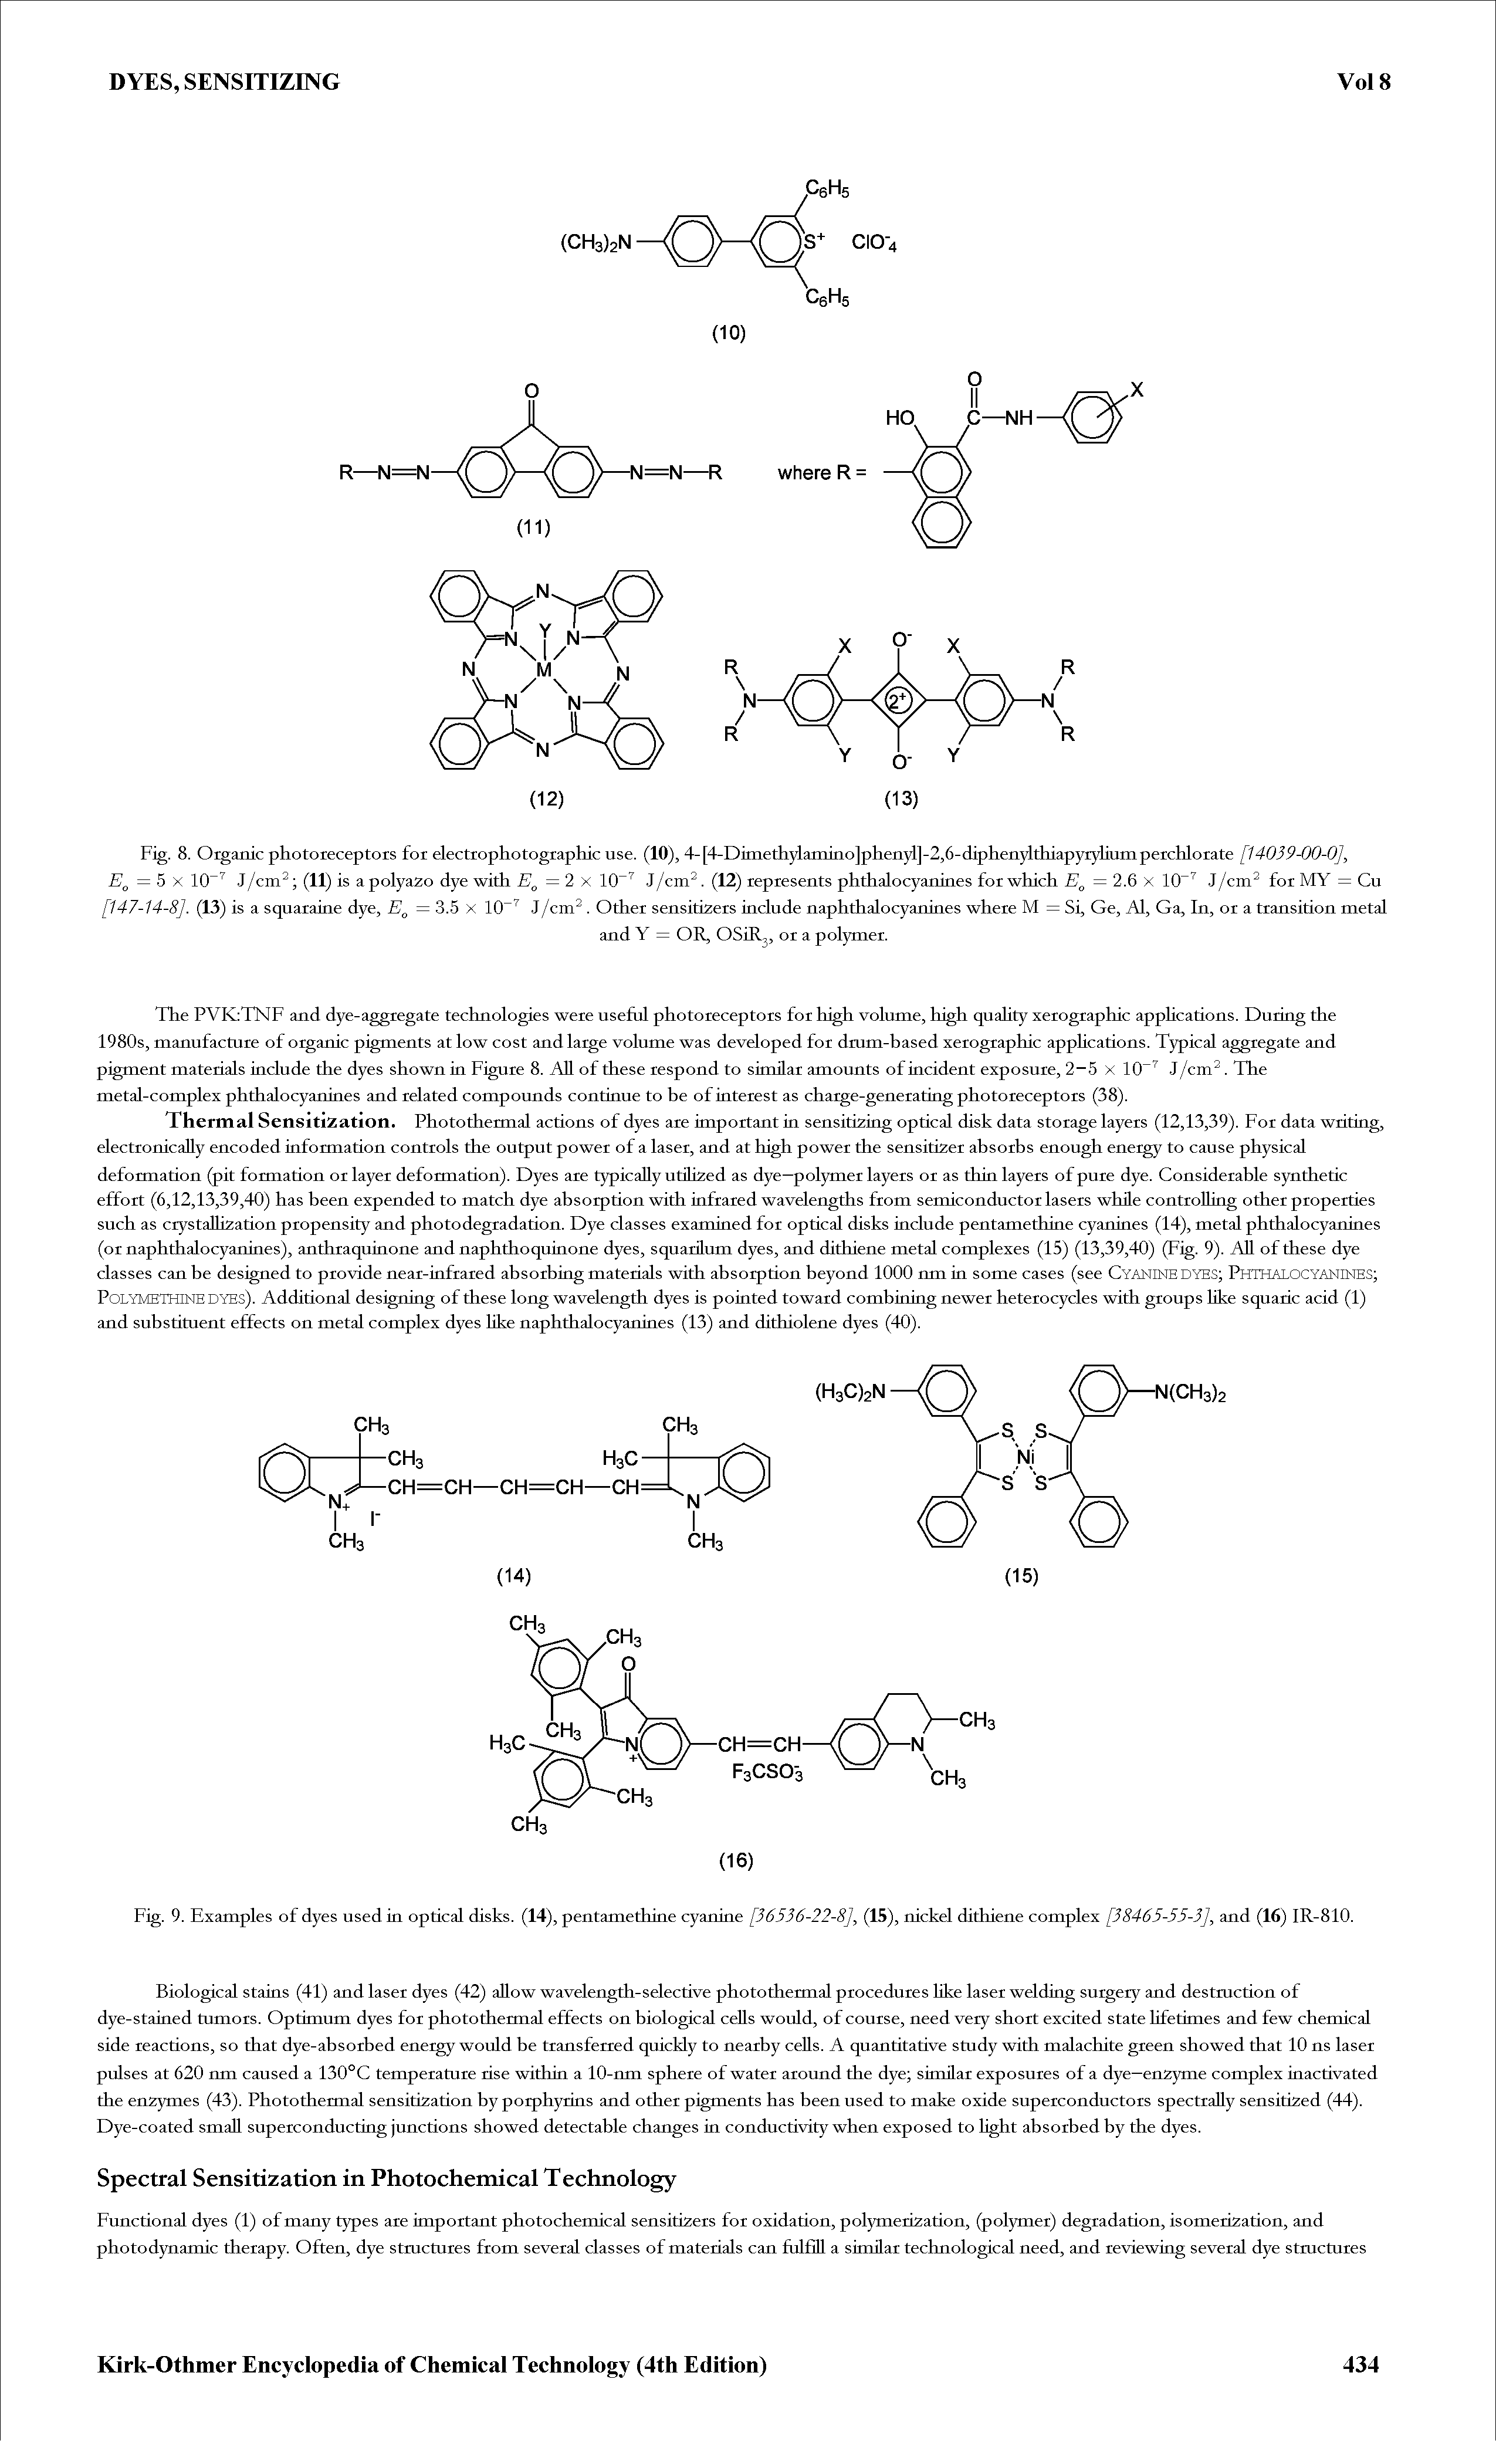 Fig. 9. Examples of dyes used in optical disks. (14), pentamethine cyanine [36536-22-8] (1 )> nickel dithiene complex [38465-55-3] and (16) lR-810.